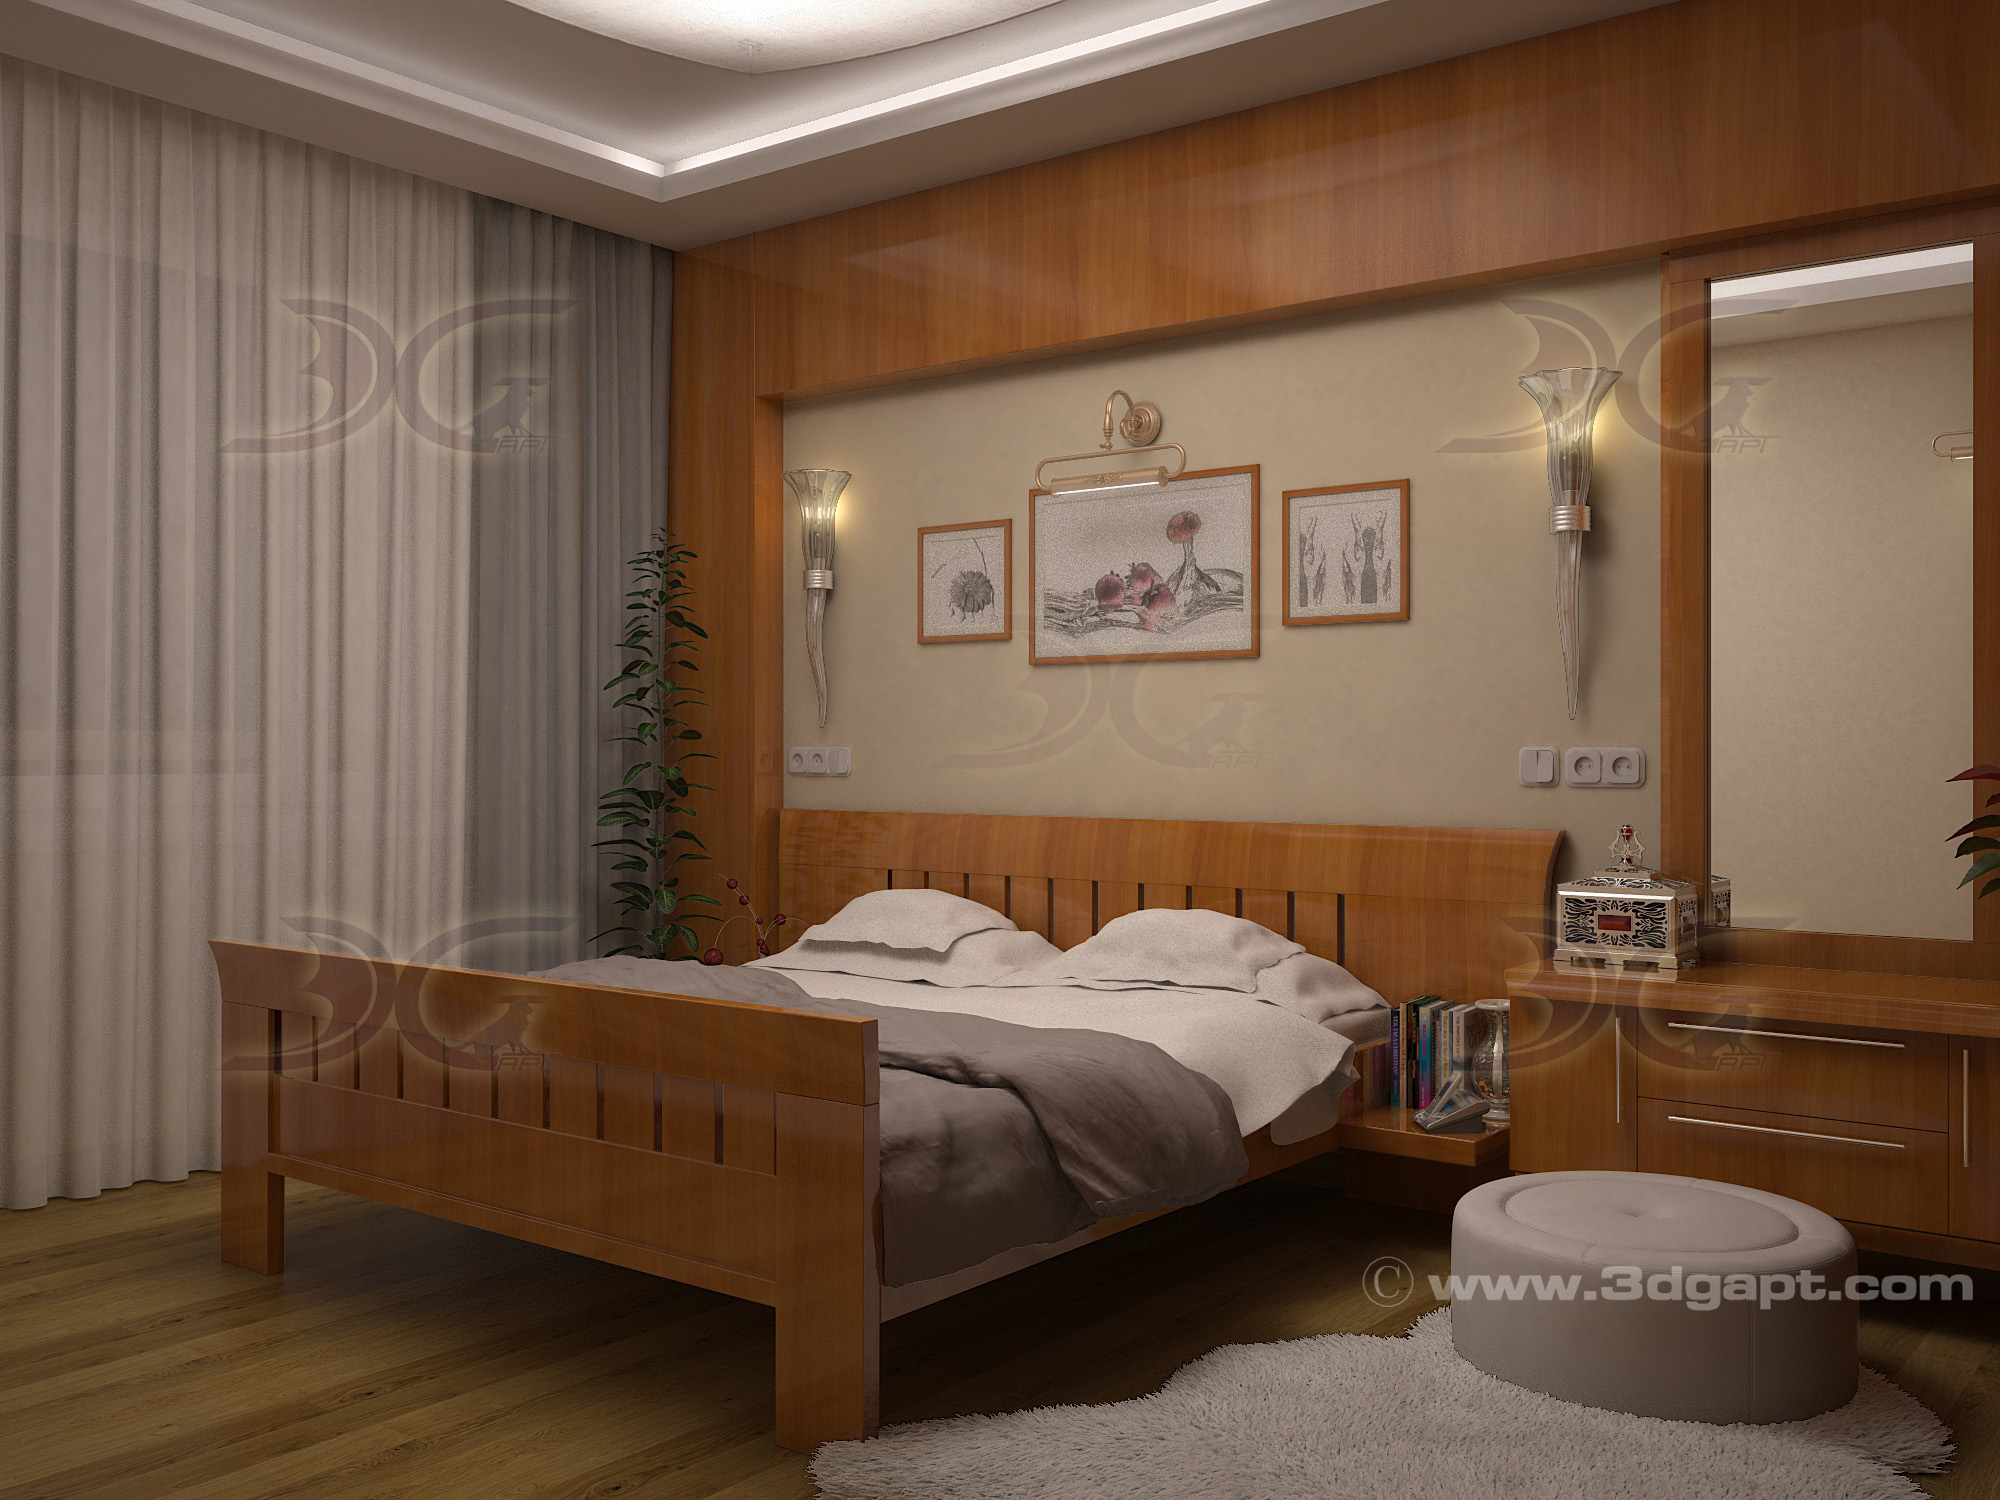 architecture interior bedroom-2 013